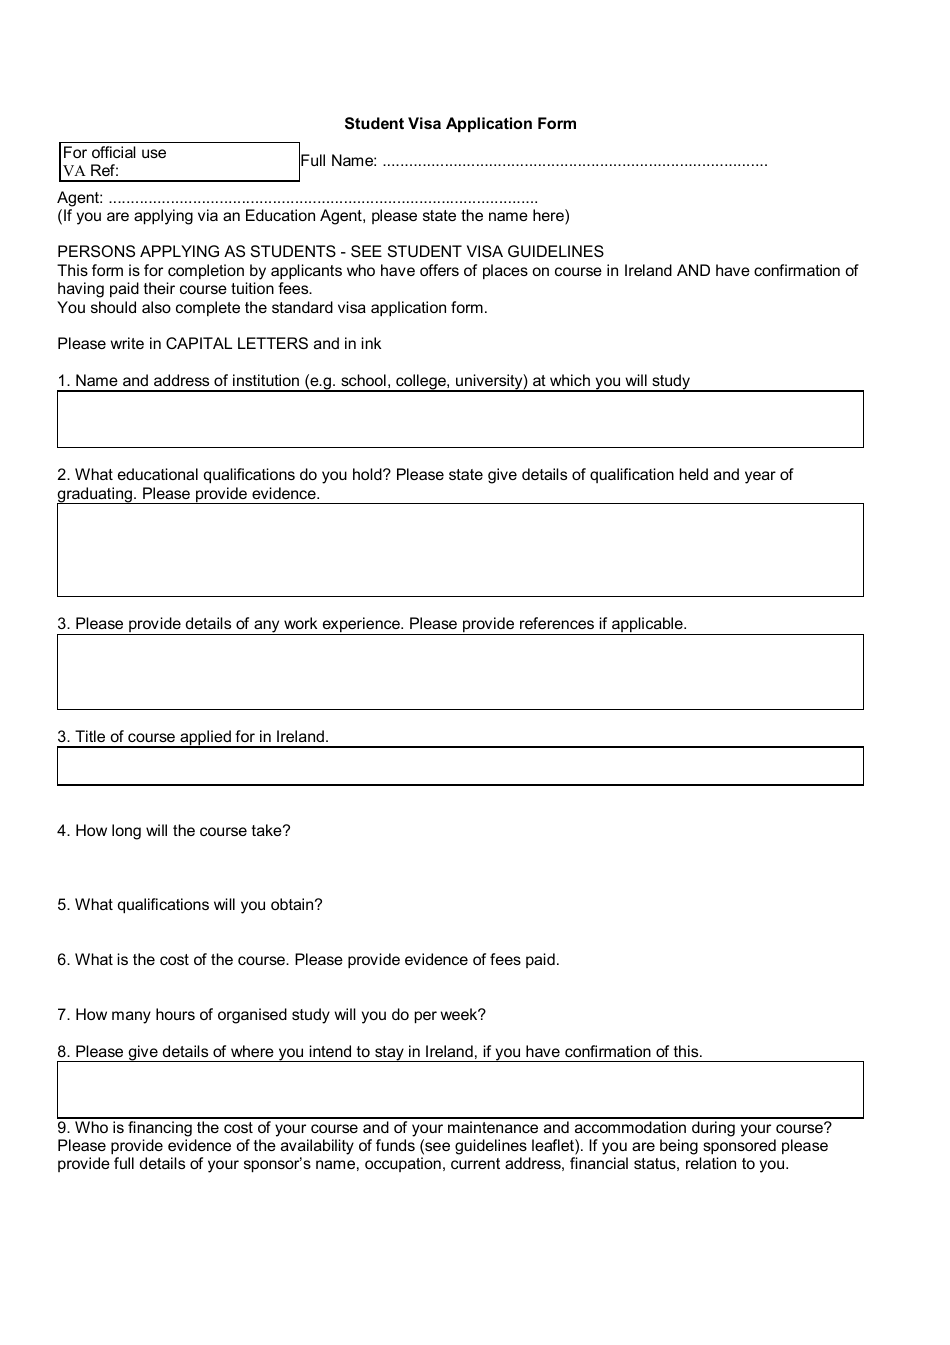 Ireland Student Visa Application Form, Page 1